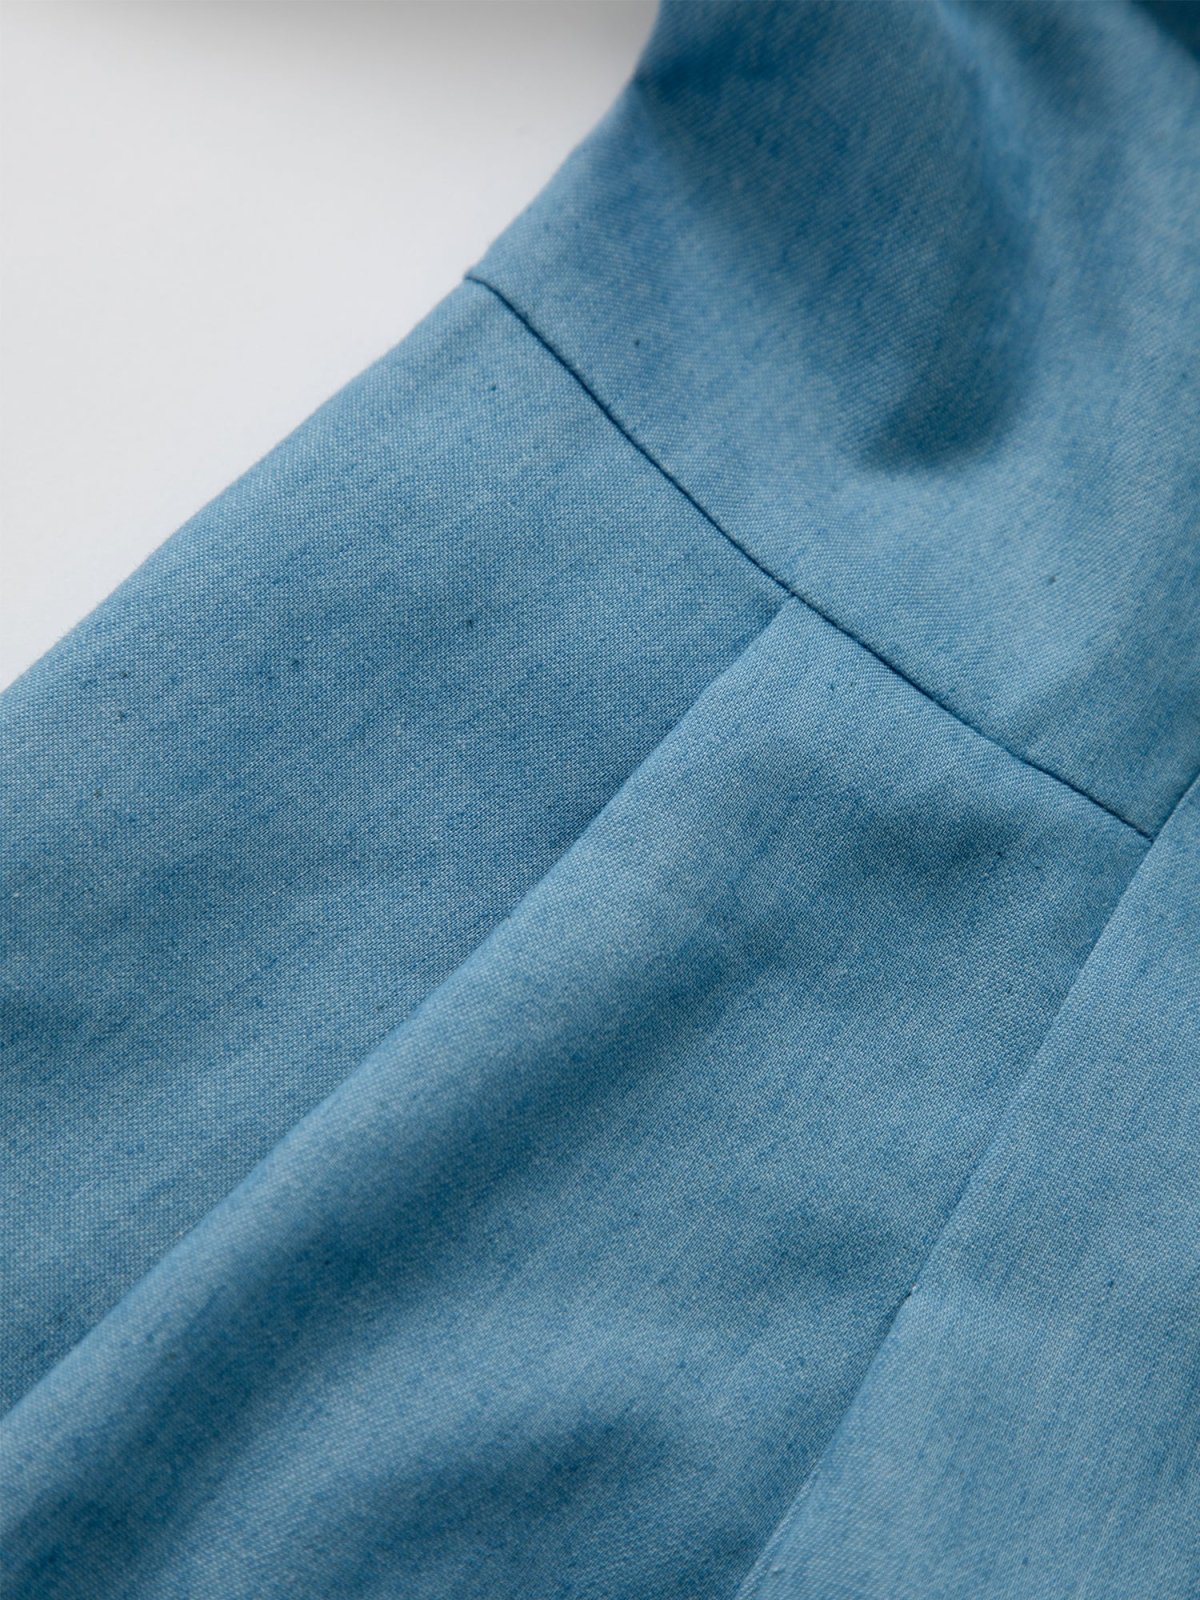 Fitted Chambray Shirt Dress - DAG-DD9045-22LightDenimS - Baby Blue - S - D'ZAGE Designs